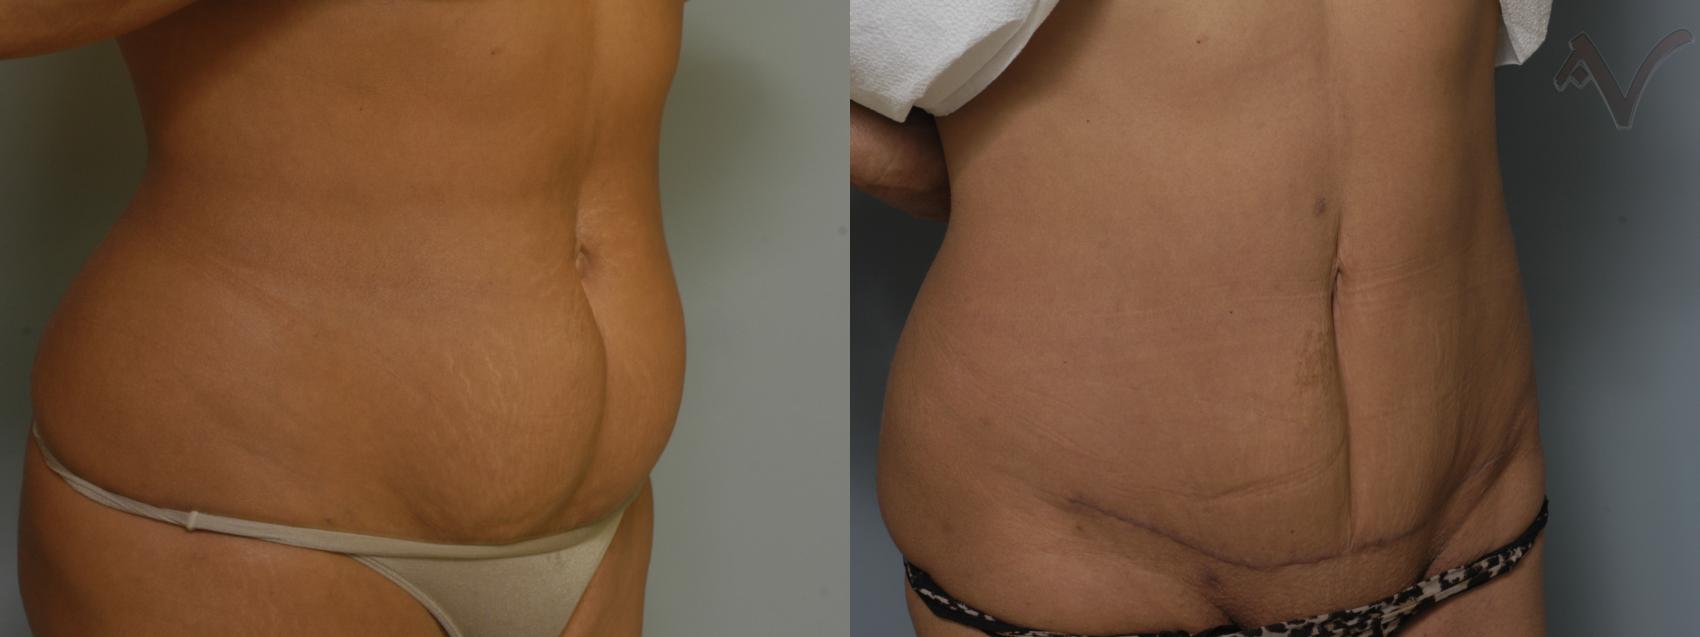 Before & After Mini Abdominoplasty Case 56 Right Oblique View in Burbank, CA